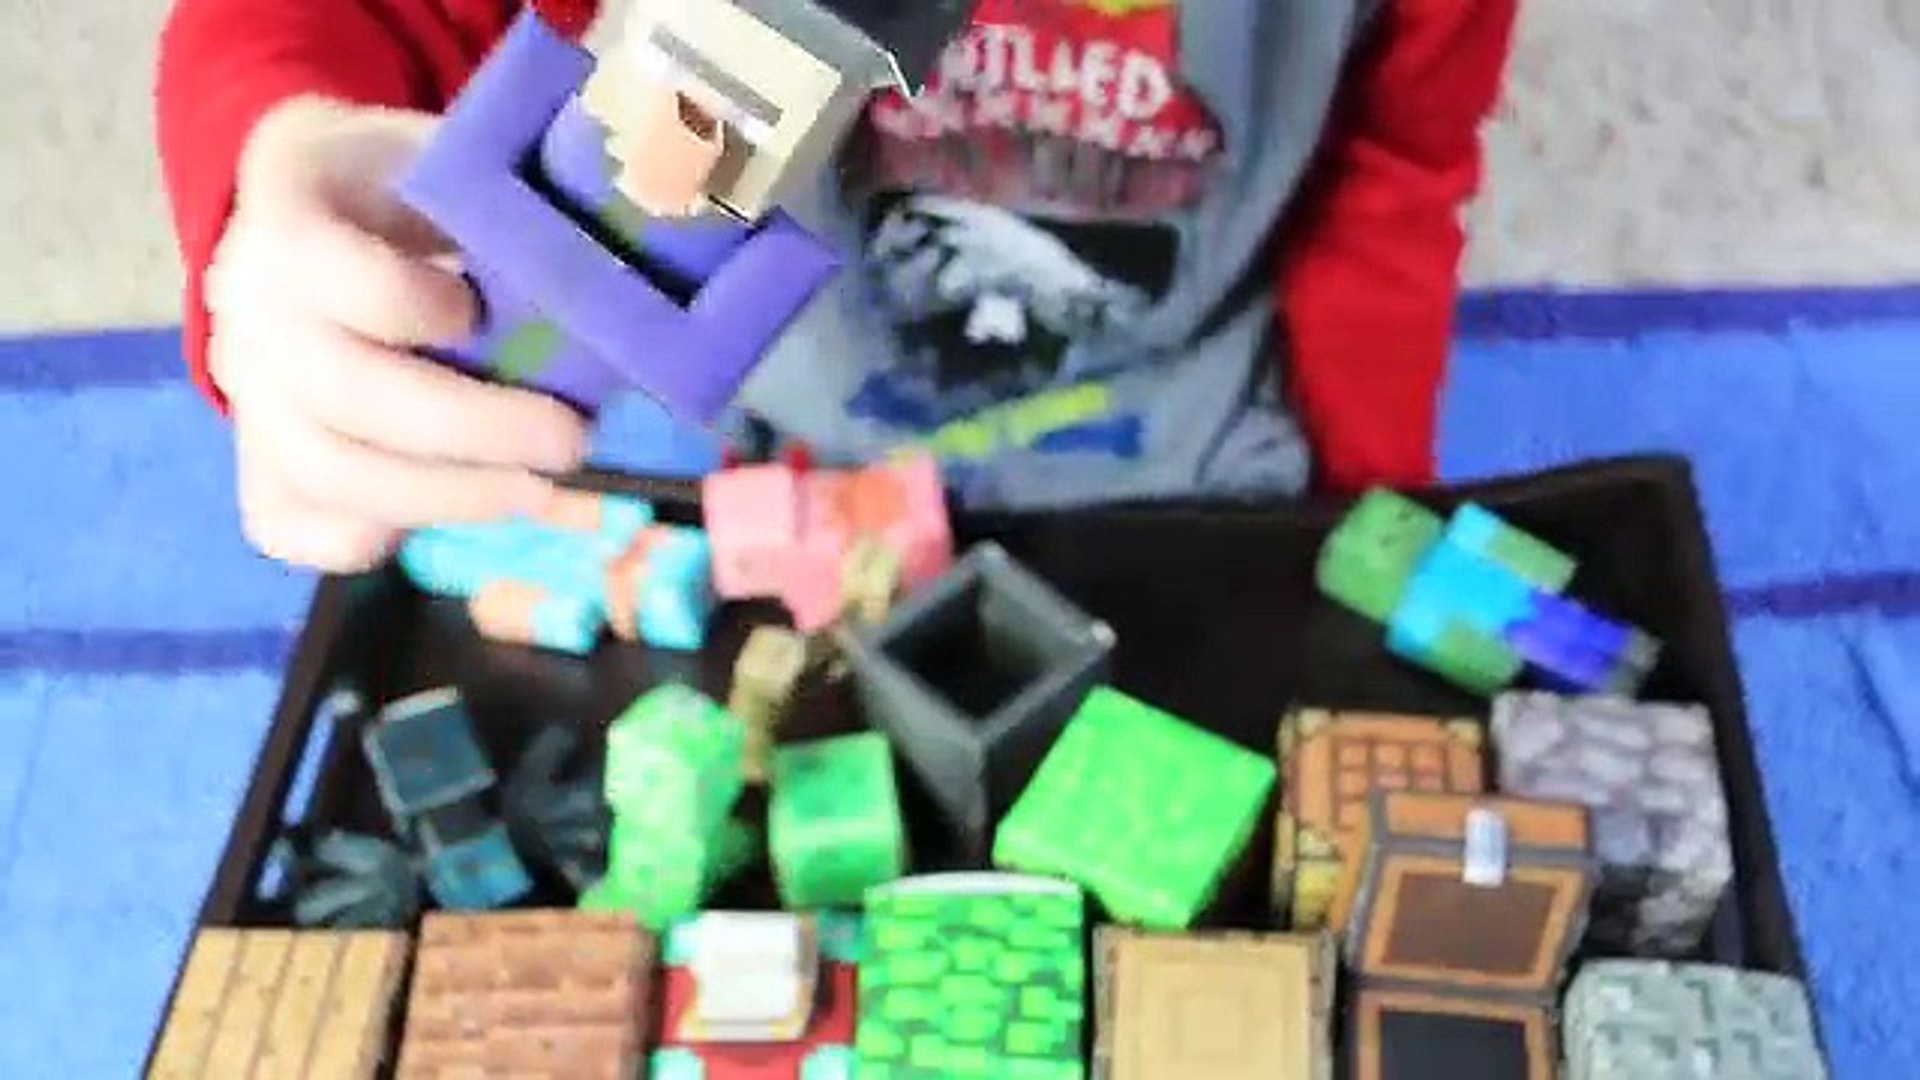 Pixel Papercraft - Minecraft Papercraft and more